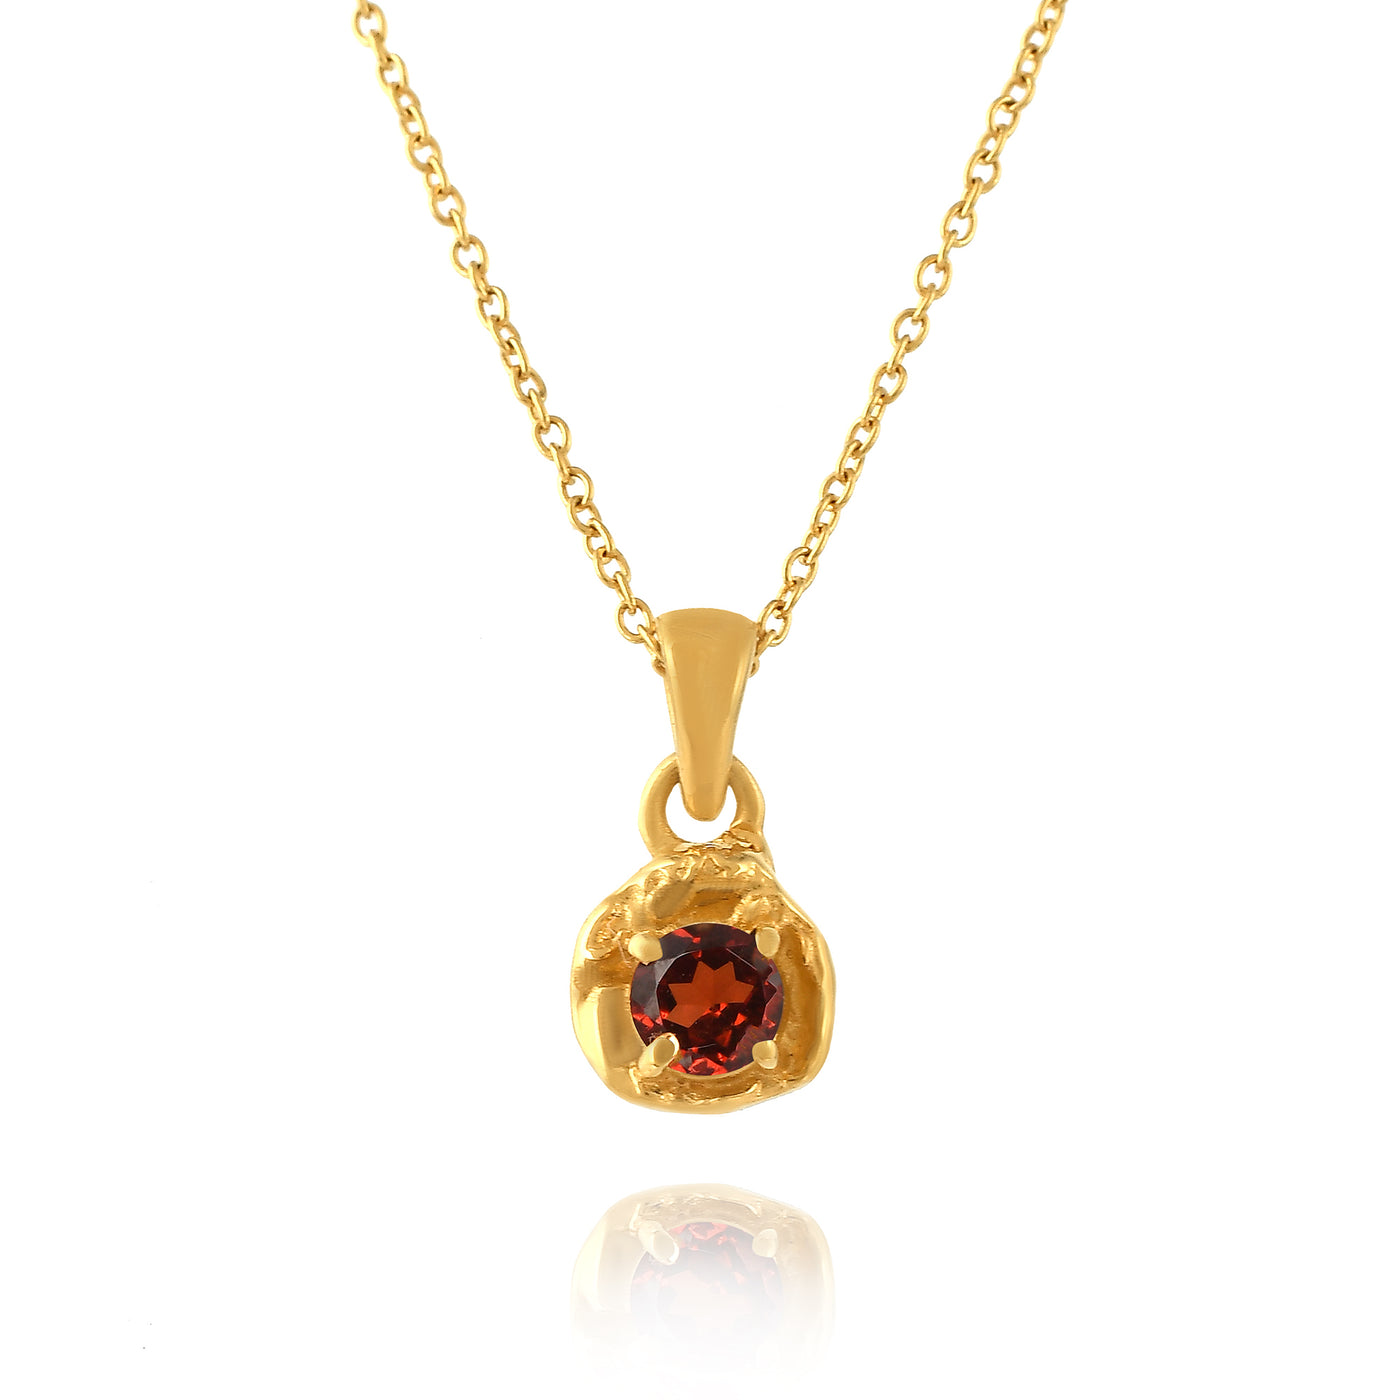 January garnet birthstone gold organic pendant necklace, Rani & Co. jewellery